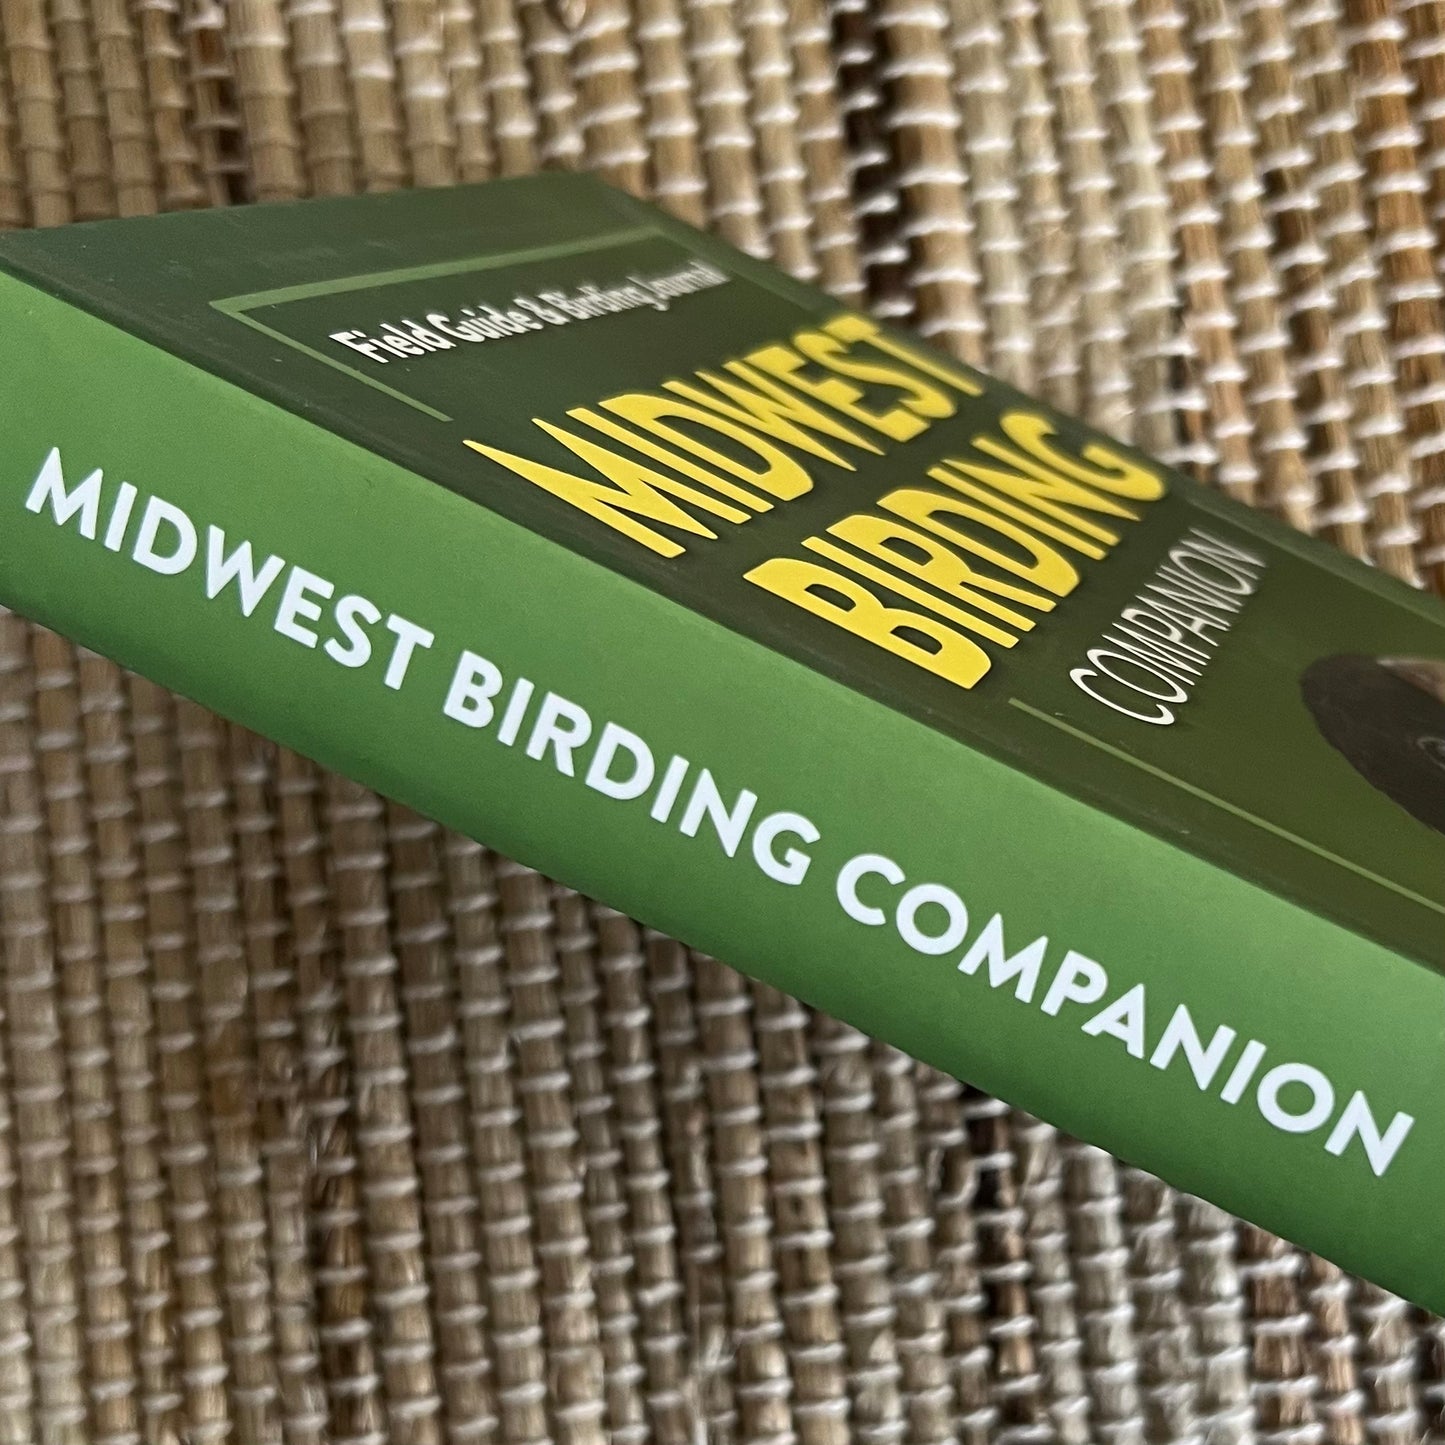 Midwest Birding Companion by Stan Tekiela